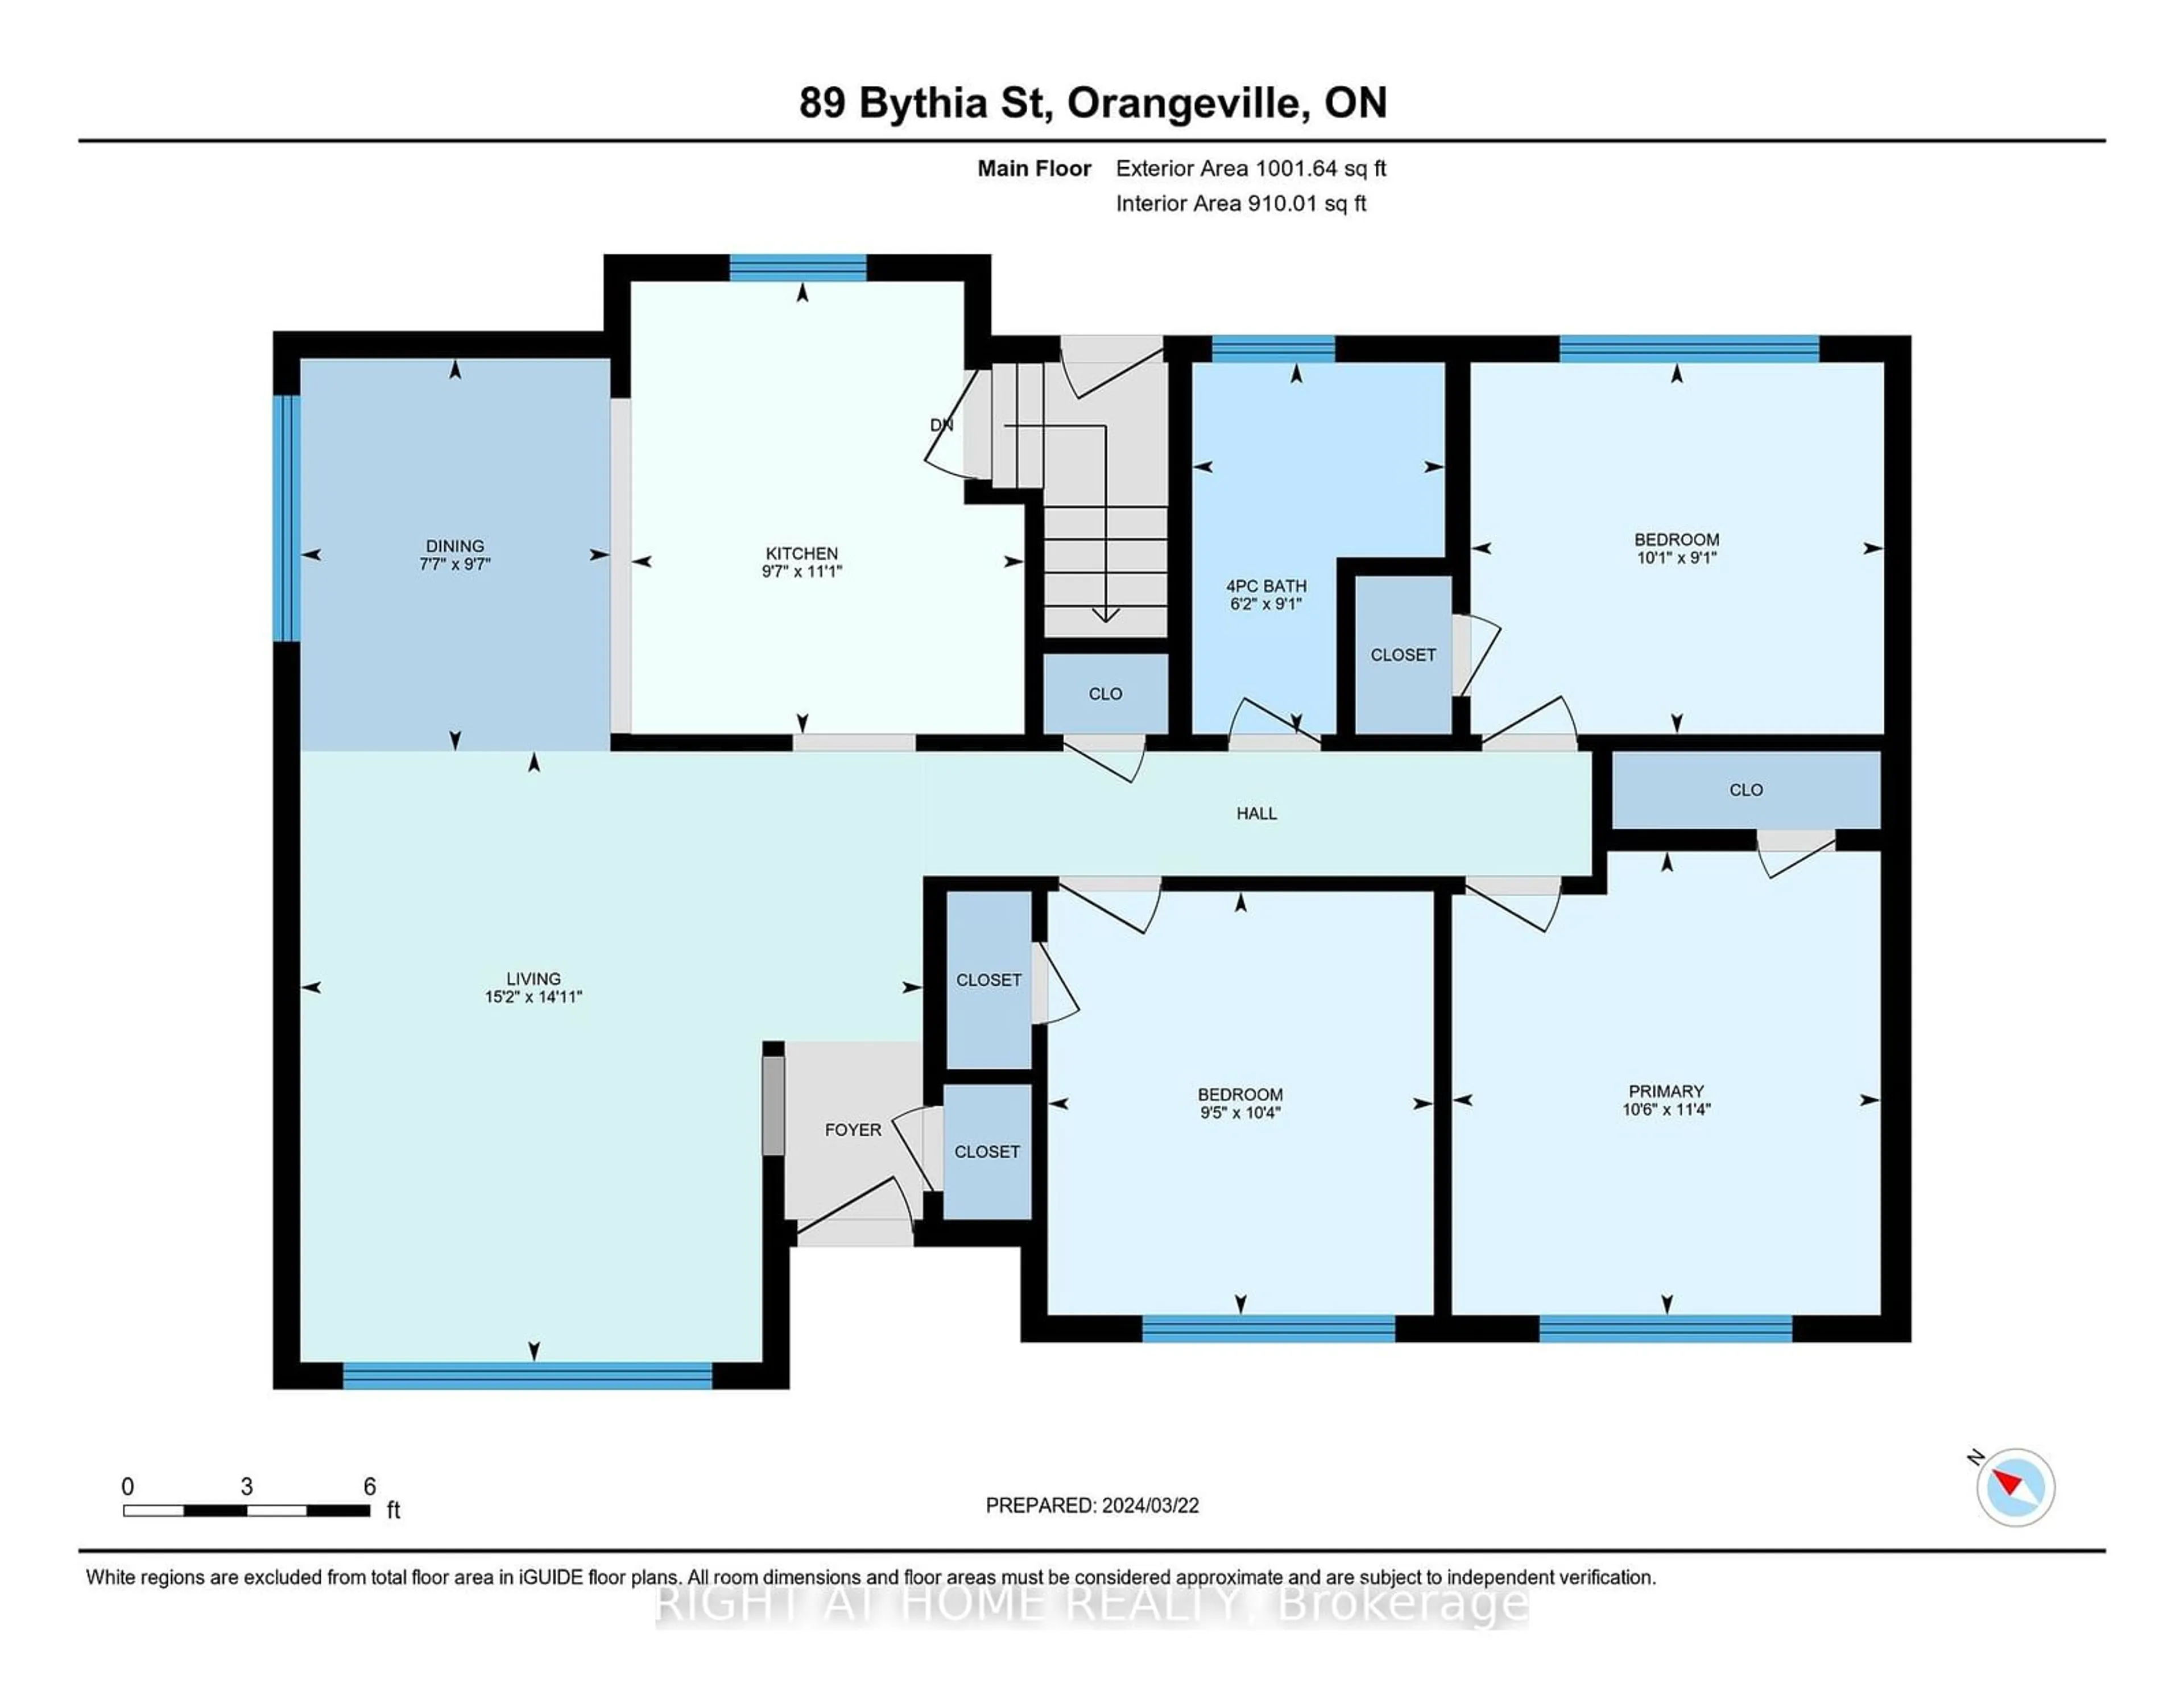 Floor plan for 89 Bythia St, Orangeville Ontario L9W 2S4